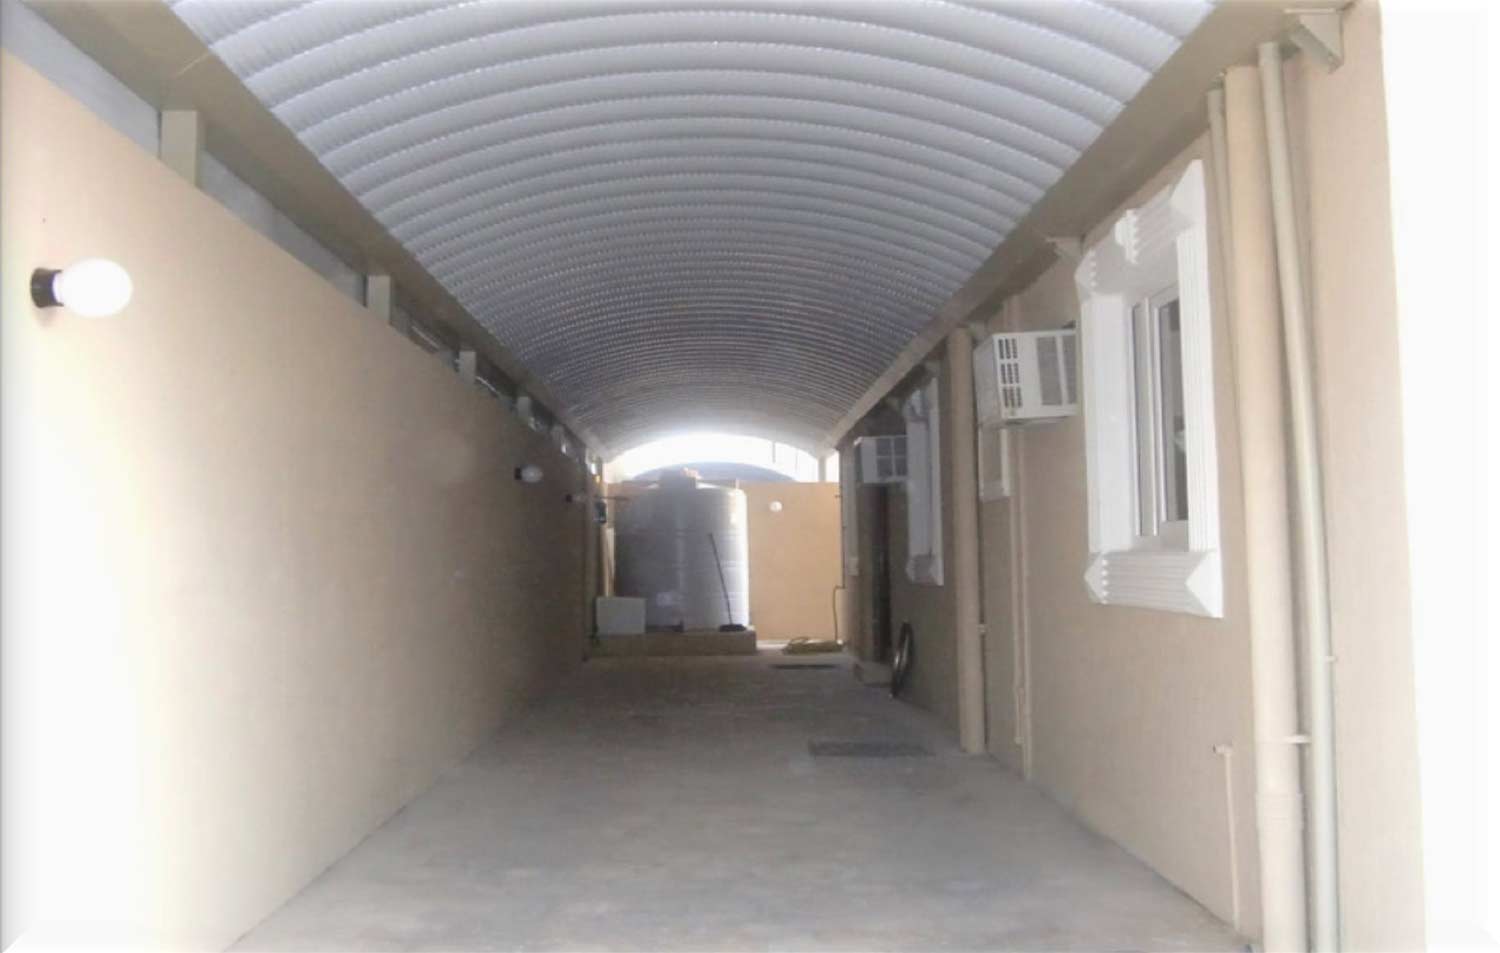 Corridor Covering